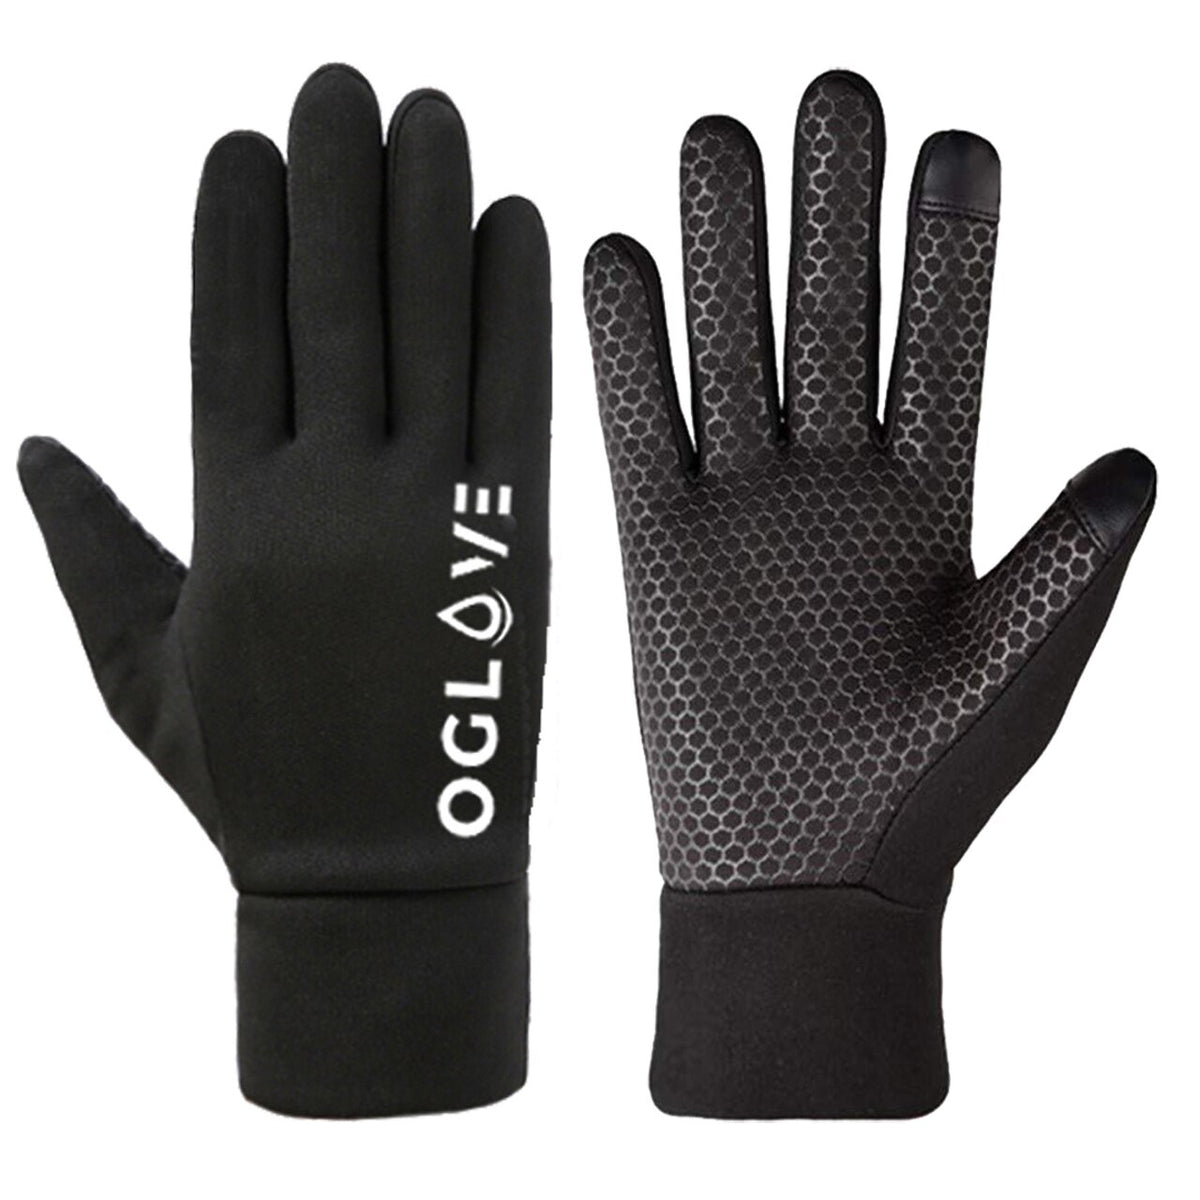 Oglove Waterproof Thermal Sport Gloves in Adult